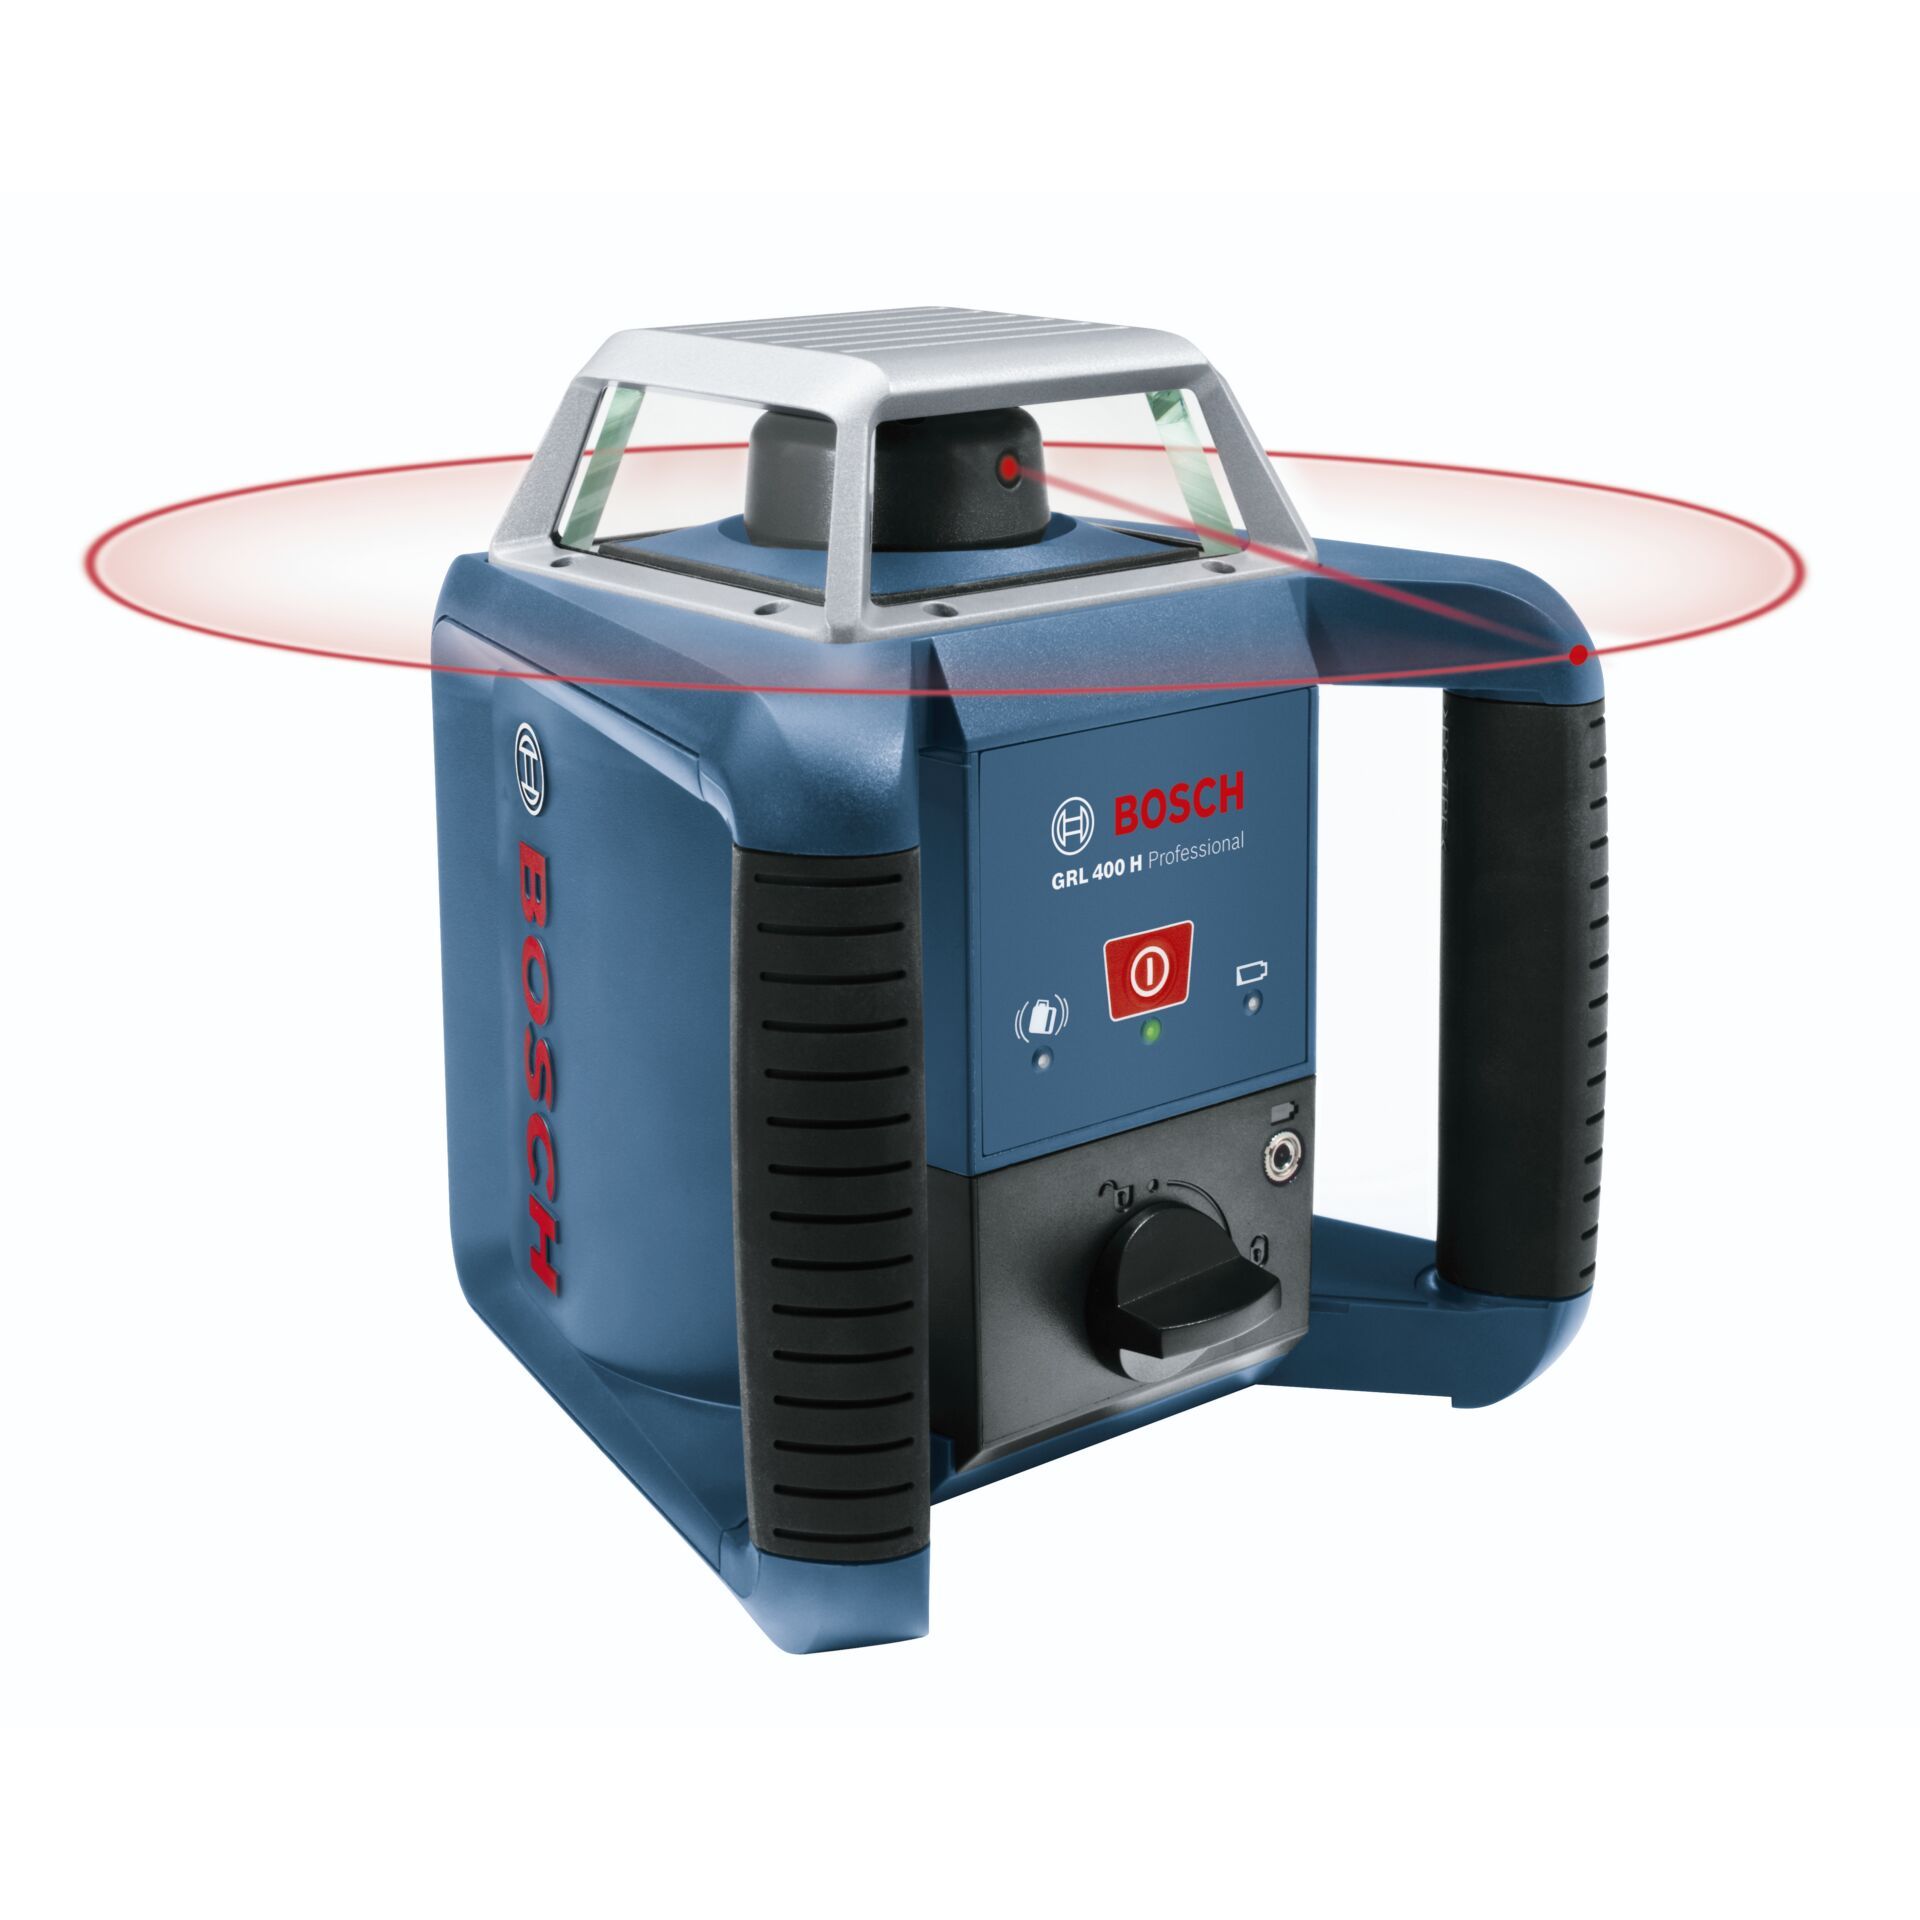 Bosch GRL 400 H Rotation Laser